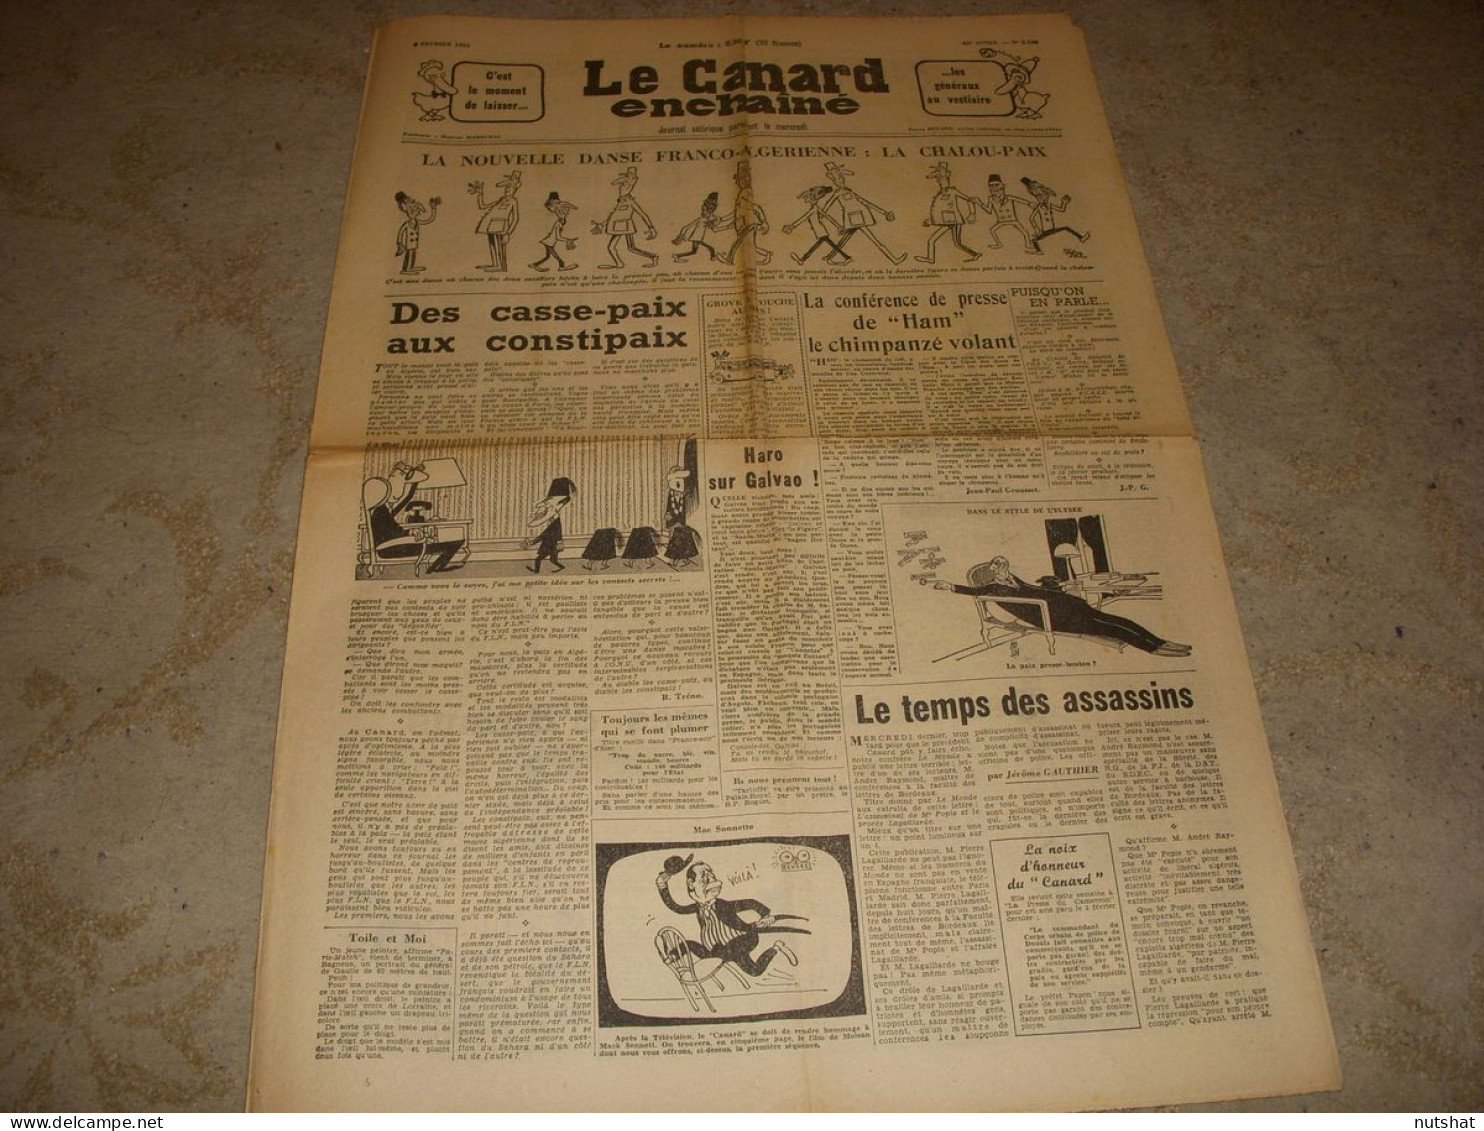 CANARD ENCHAINE 2103 08.02.1961 THEATRE Les AMBASSADES Alphonse SECHE SENNETT - Política